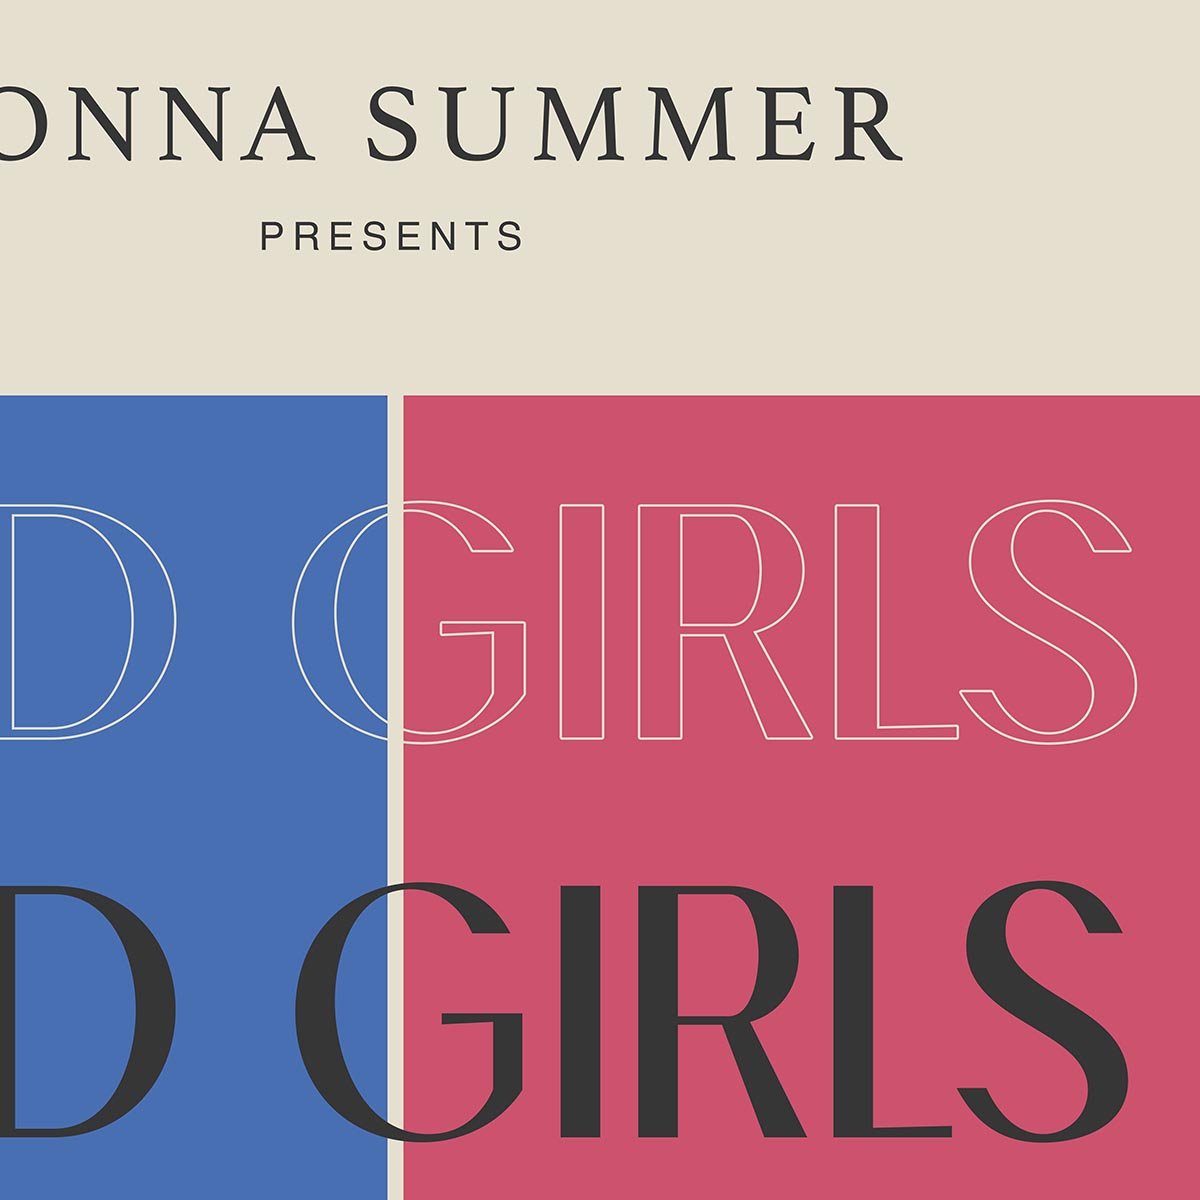 Bad Girls by Donna Summer